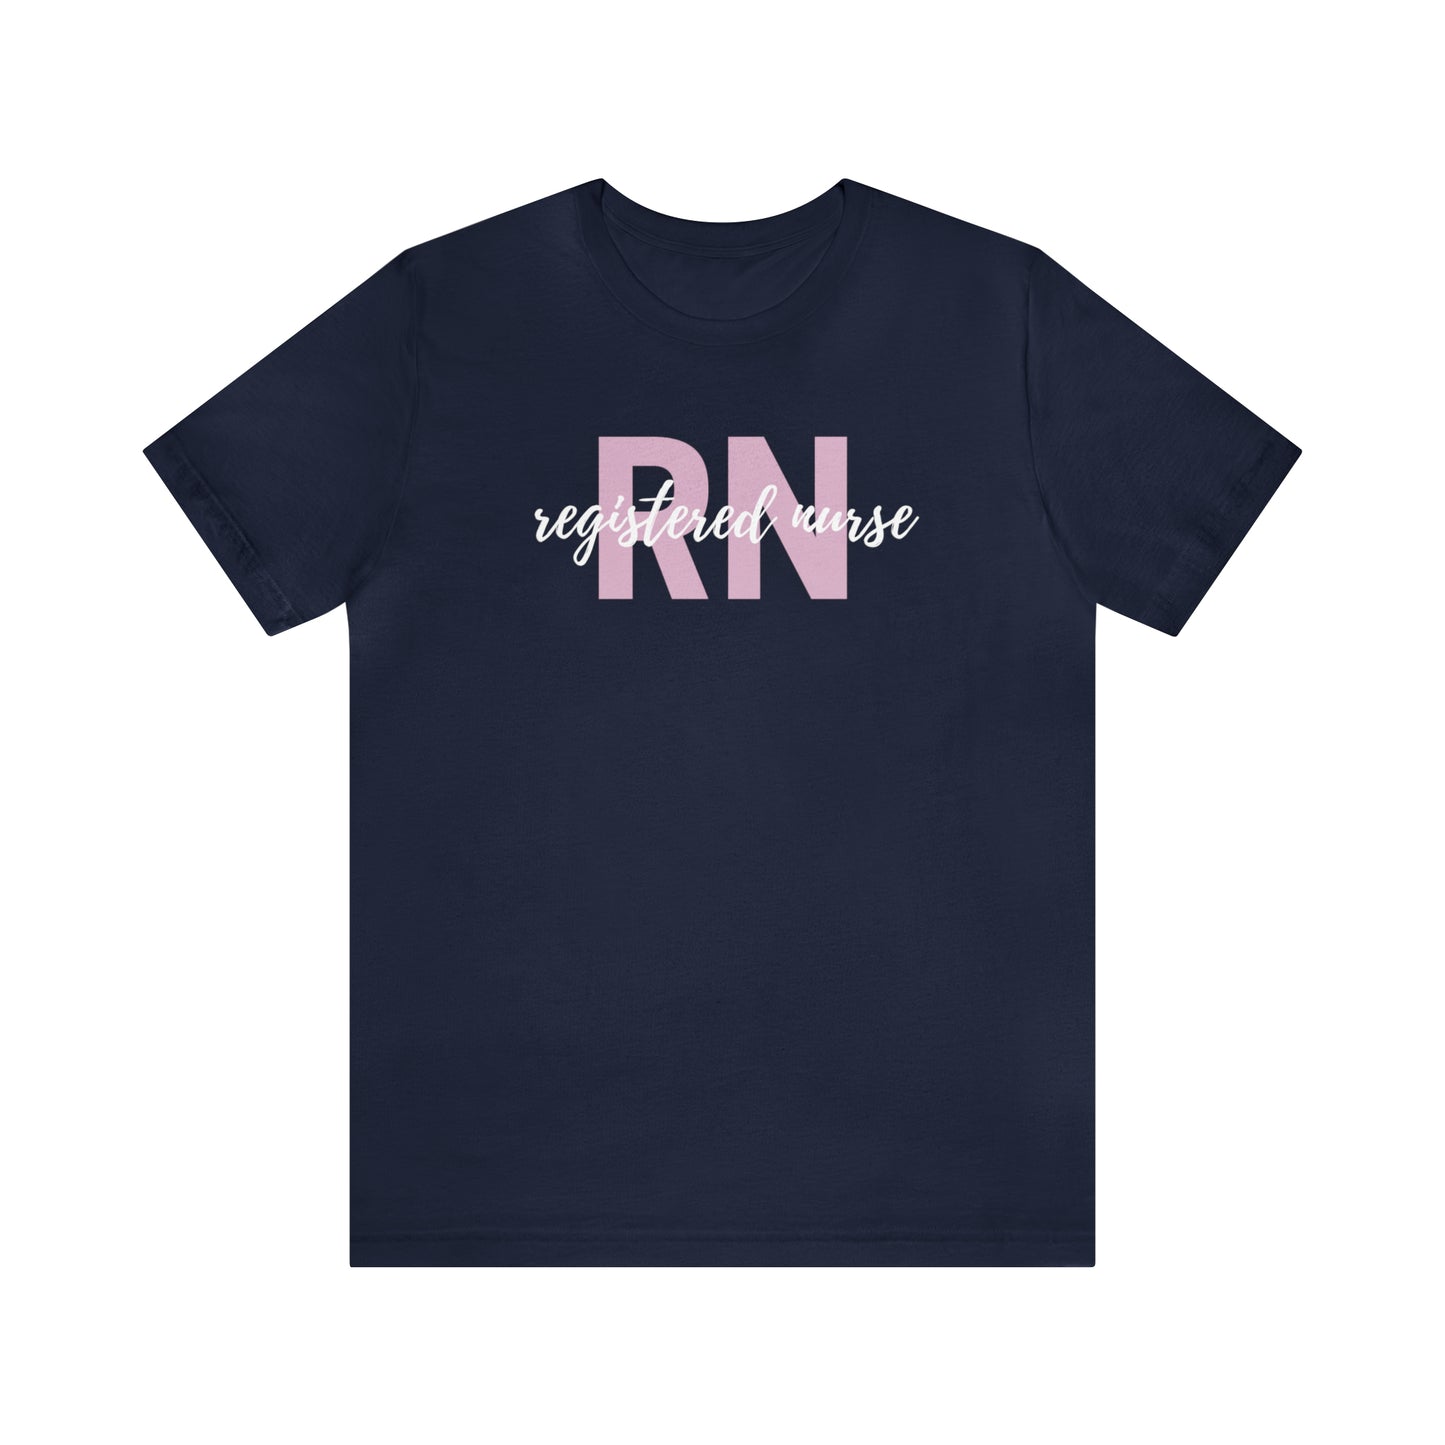 Registered Nurse RN Shirt, Nursing School Shirt, RN Graduation Gift, T-Shirt for Nurses, Gift for Registered Nurse, Nursing Instructor GIft